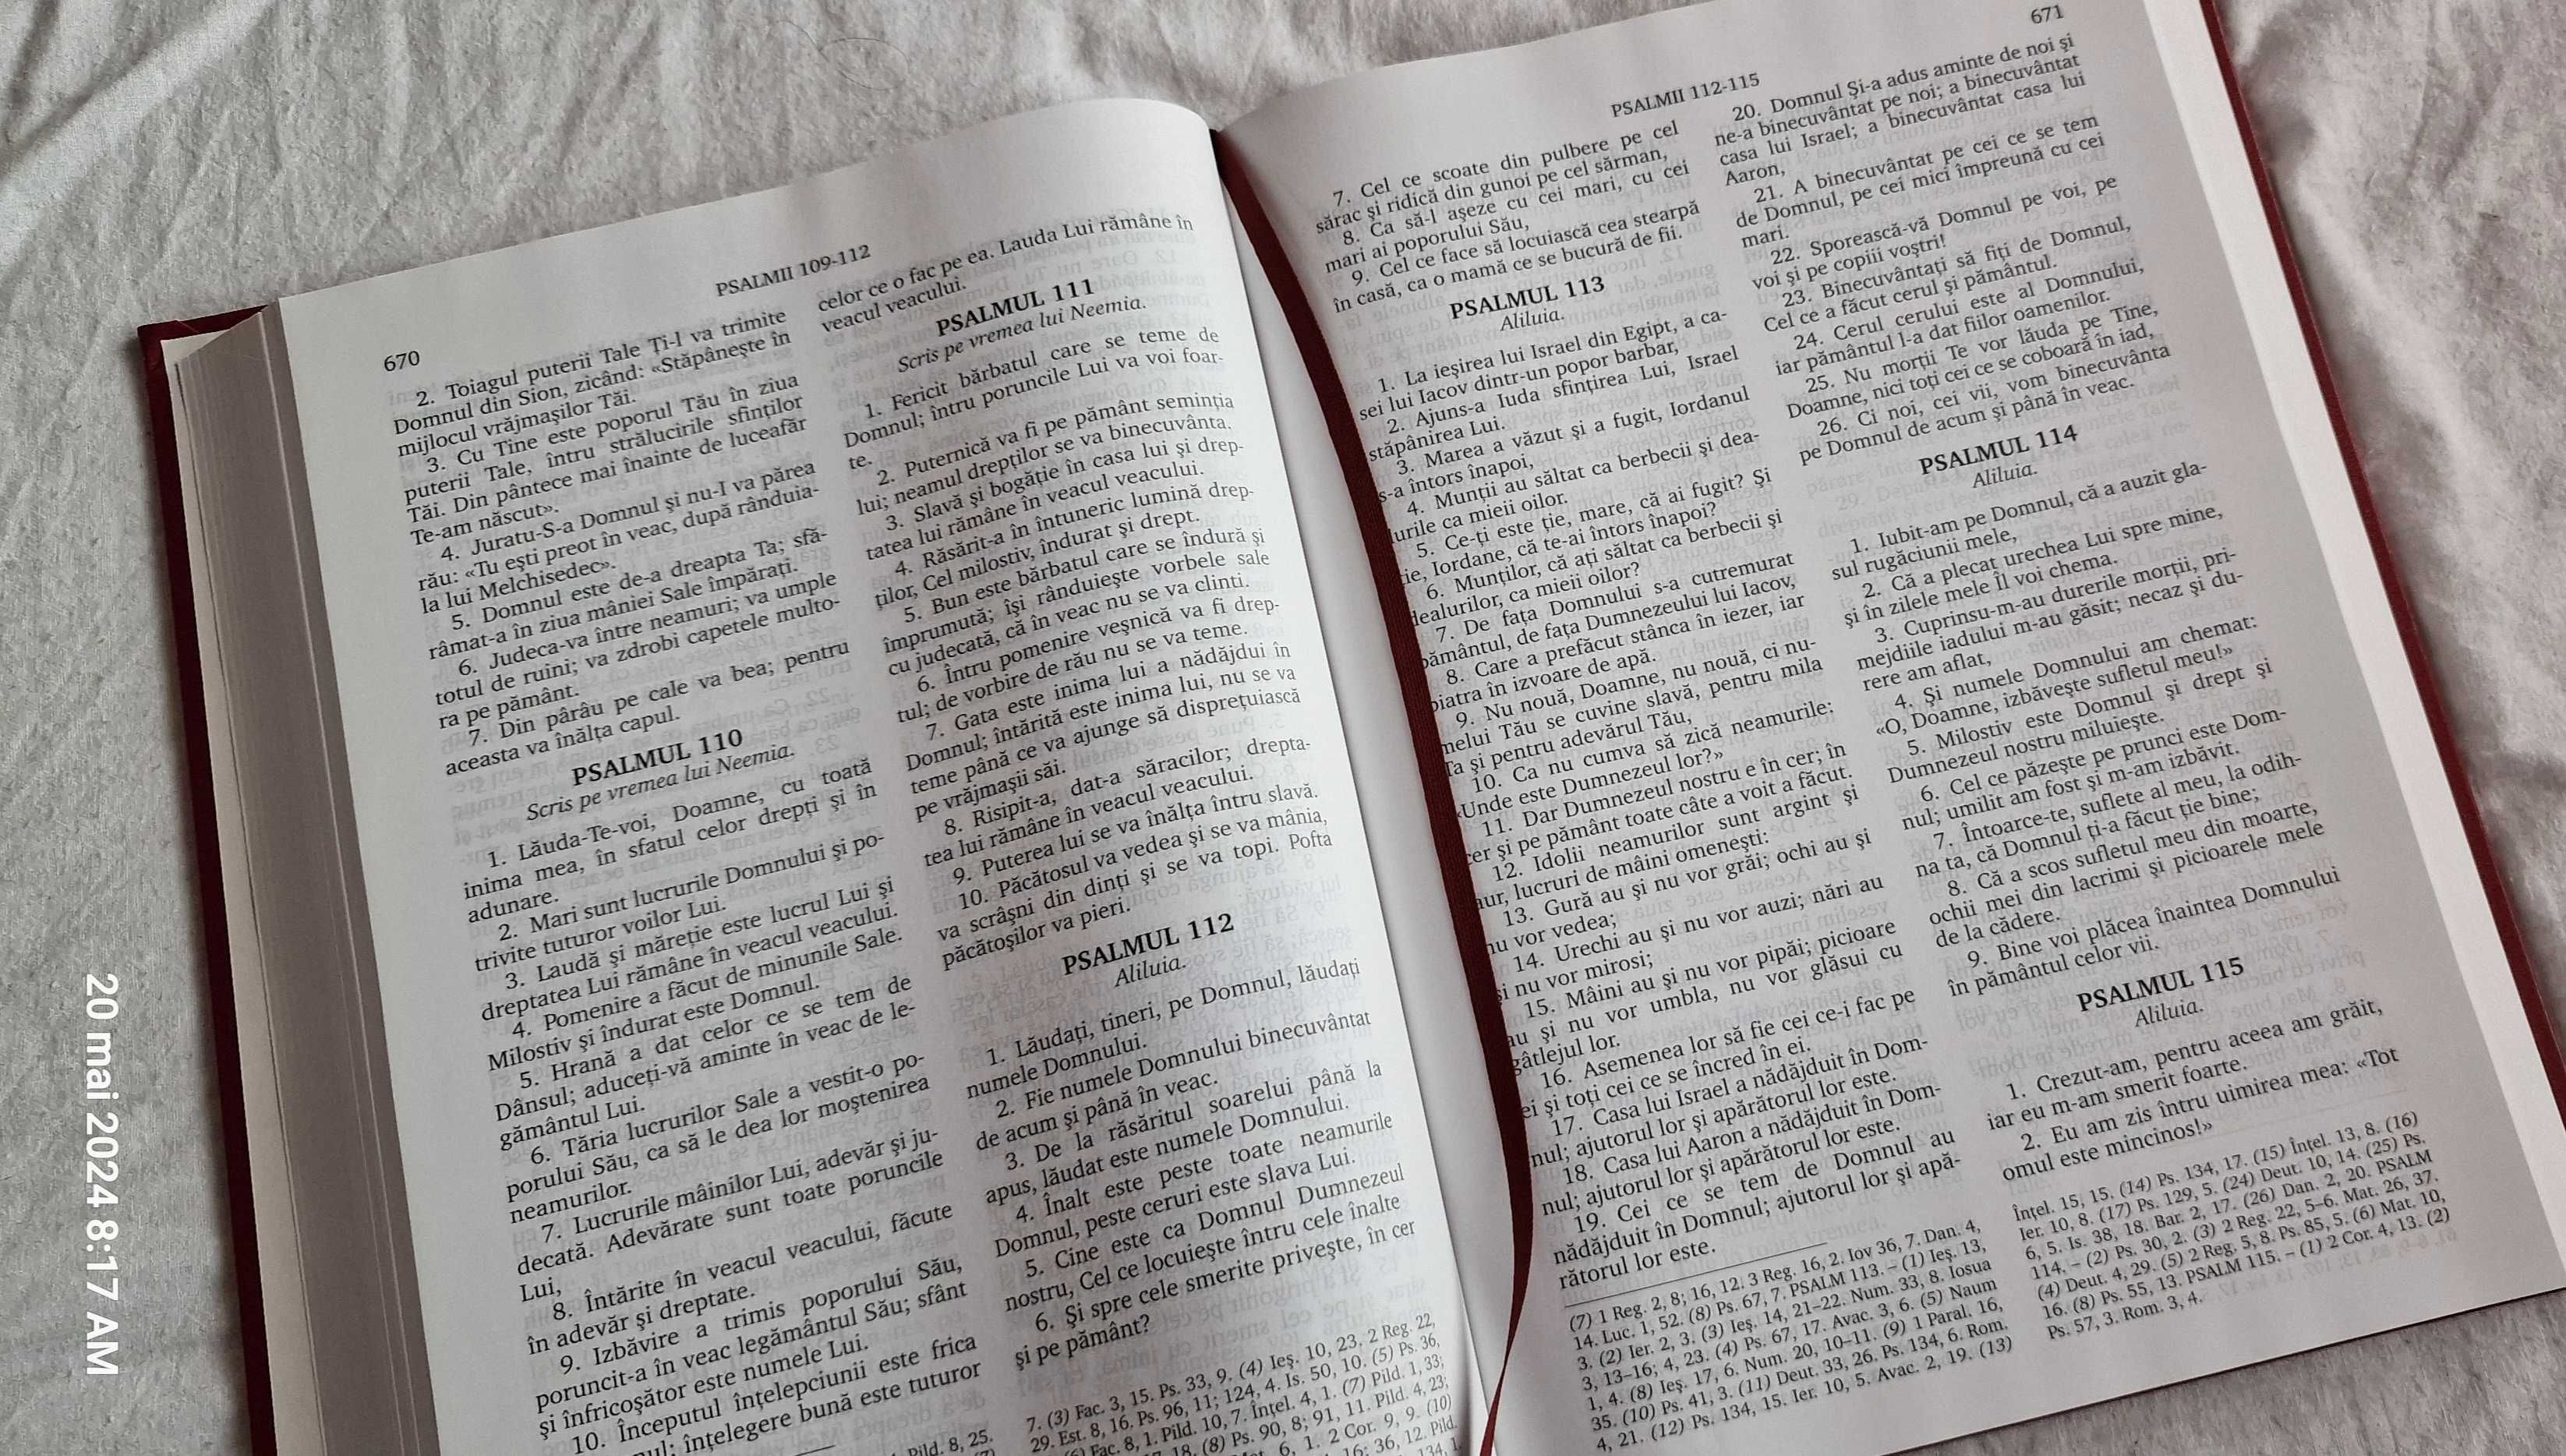 BIBLIA ortodoxa -scris mare A4